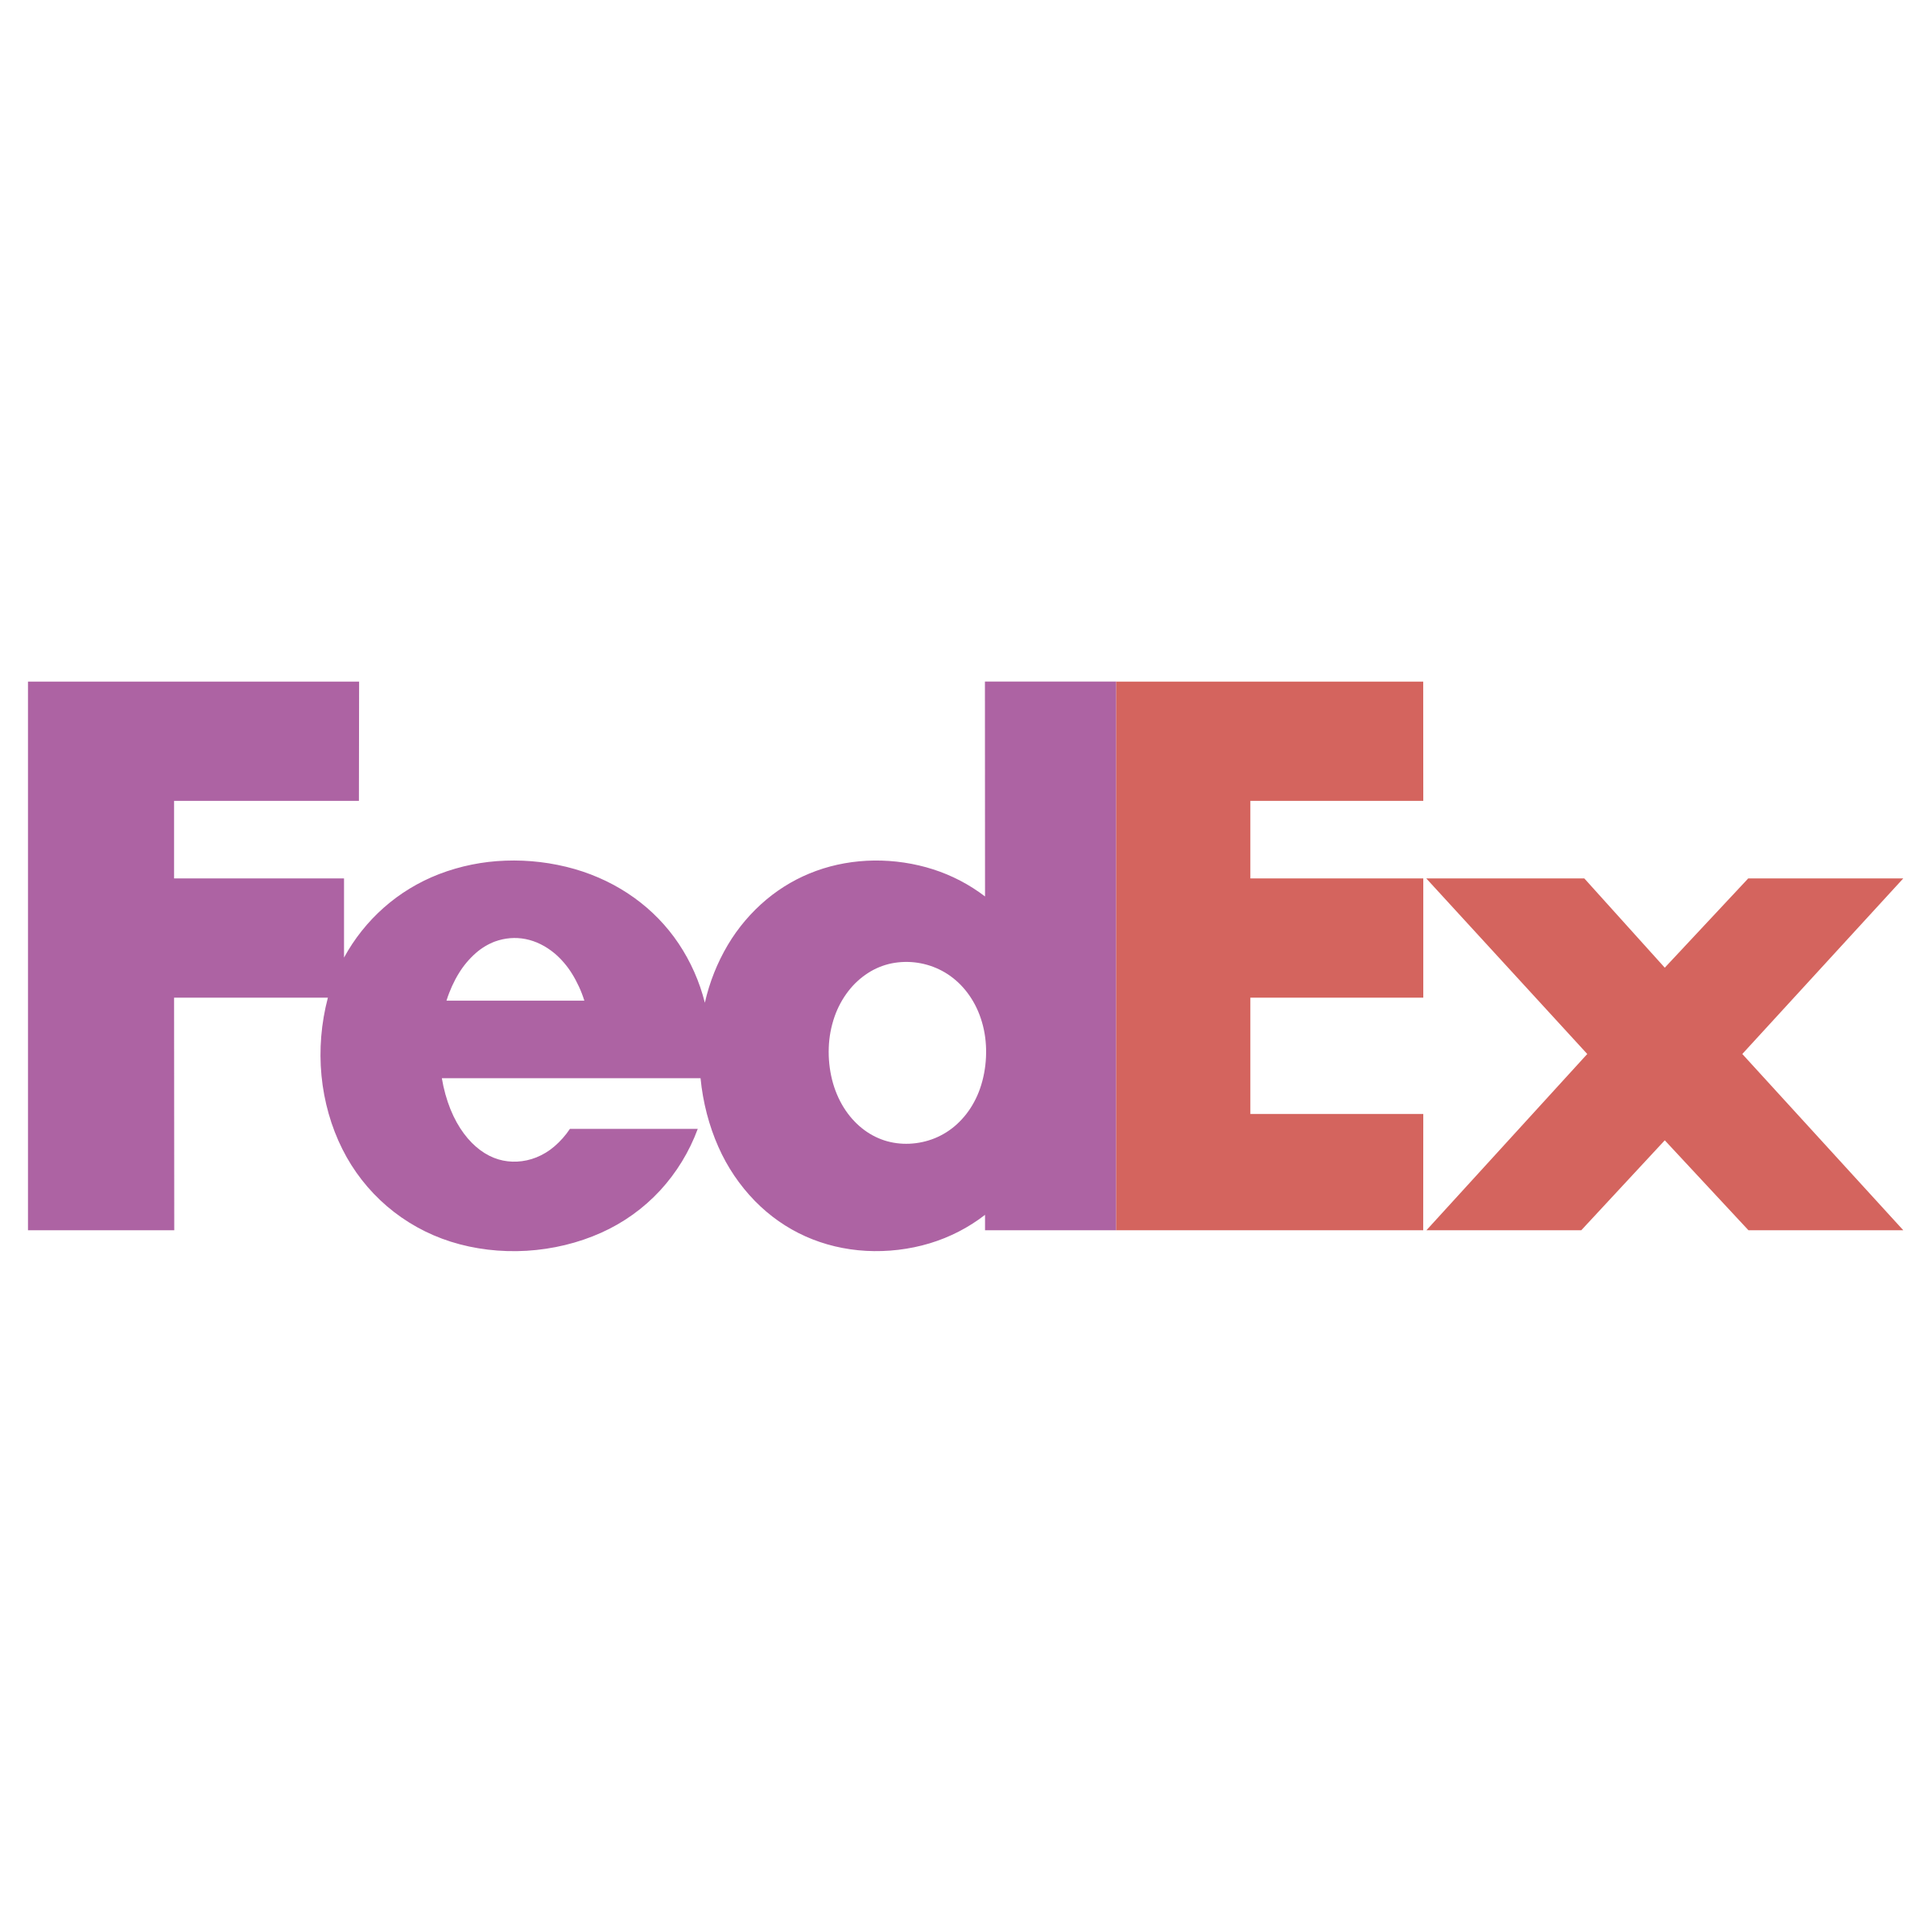 Download Logo Fedex Download Free Image HQ PNG Image FreePNGImg.